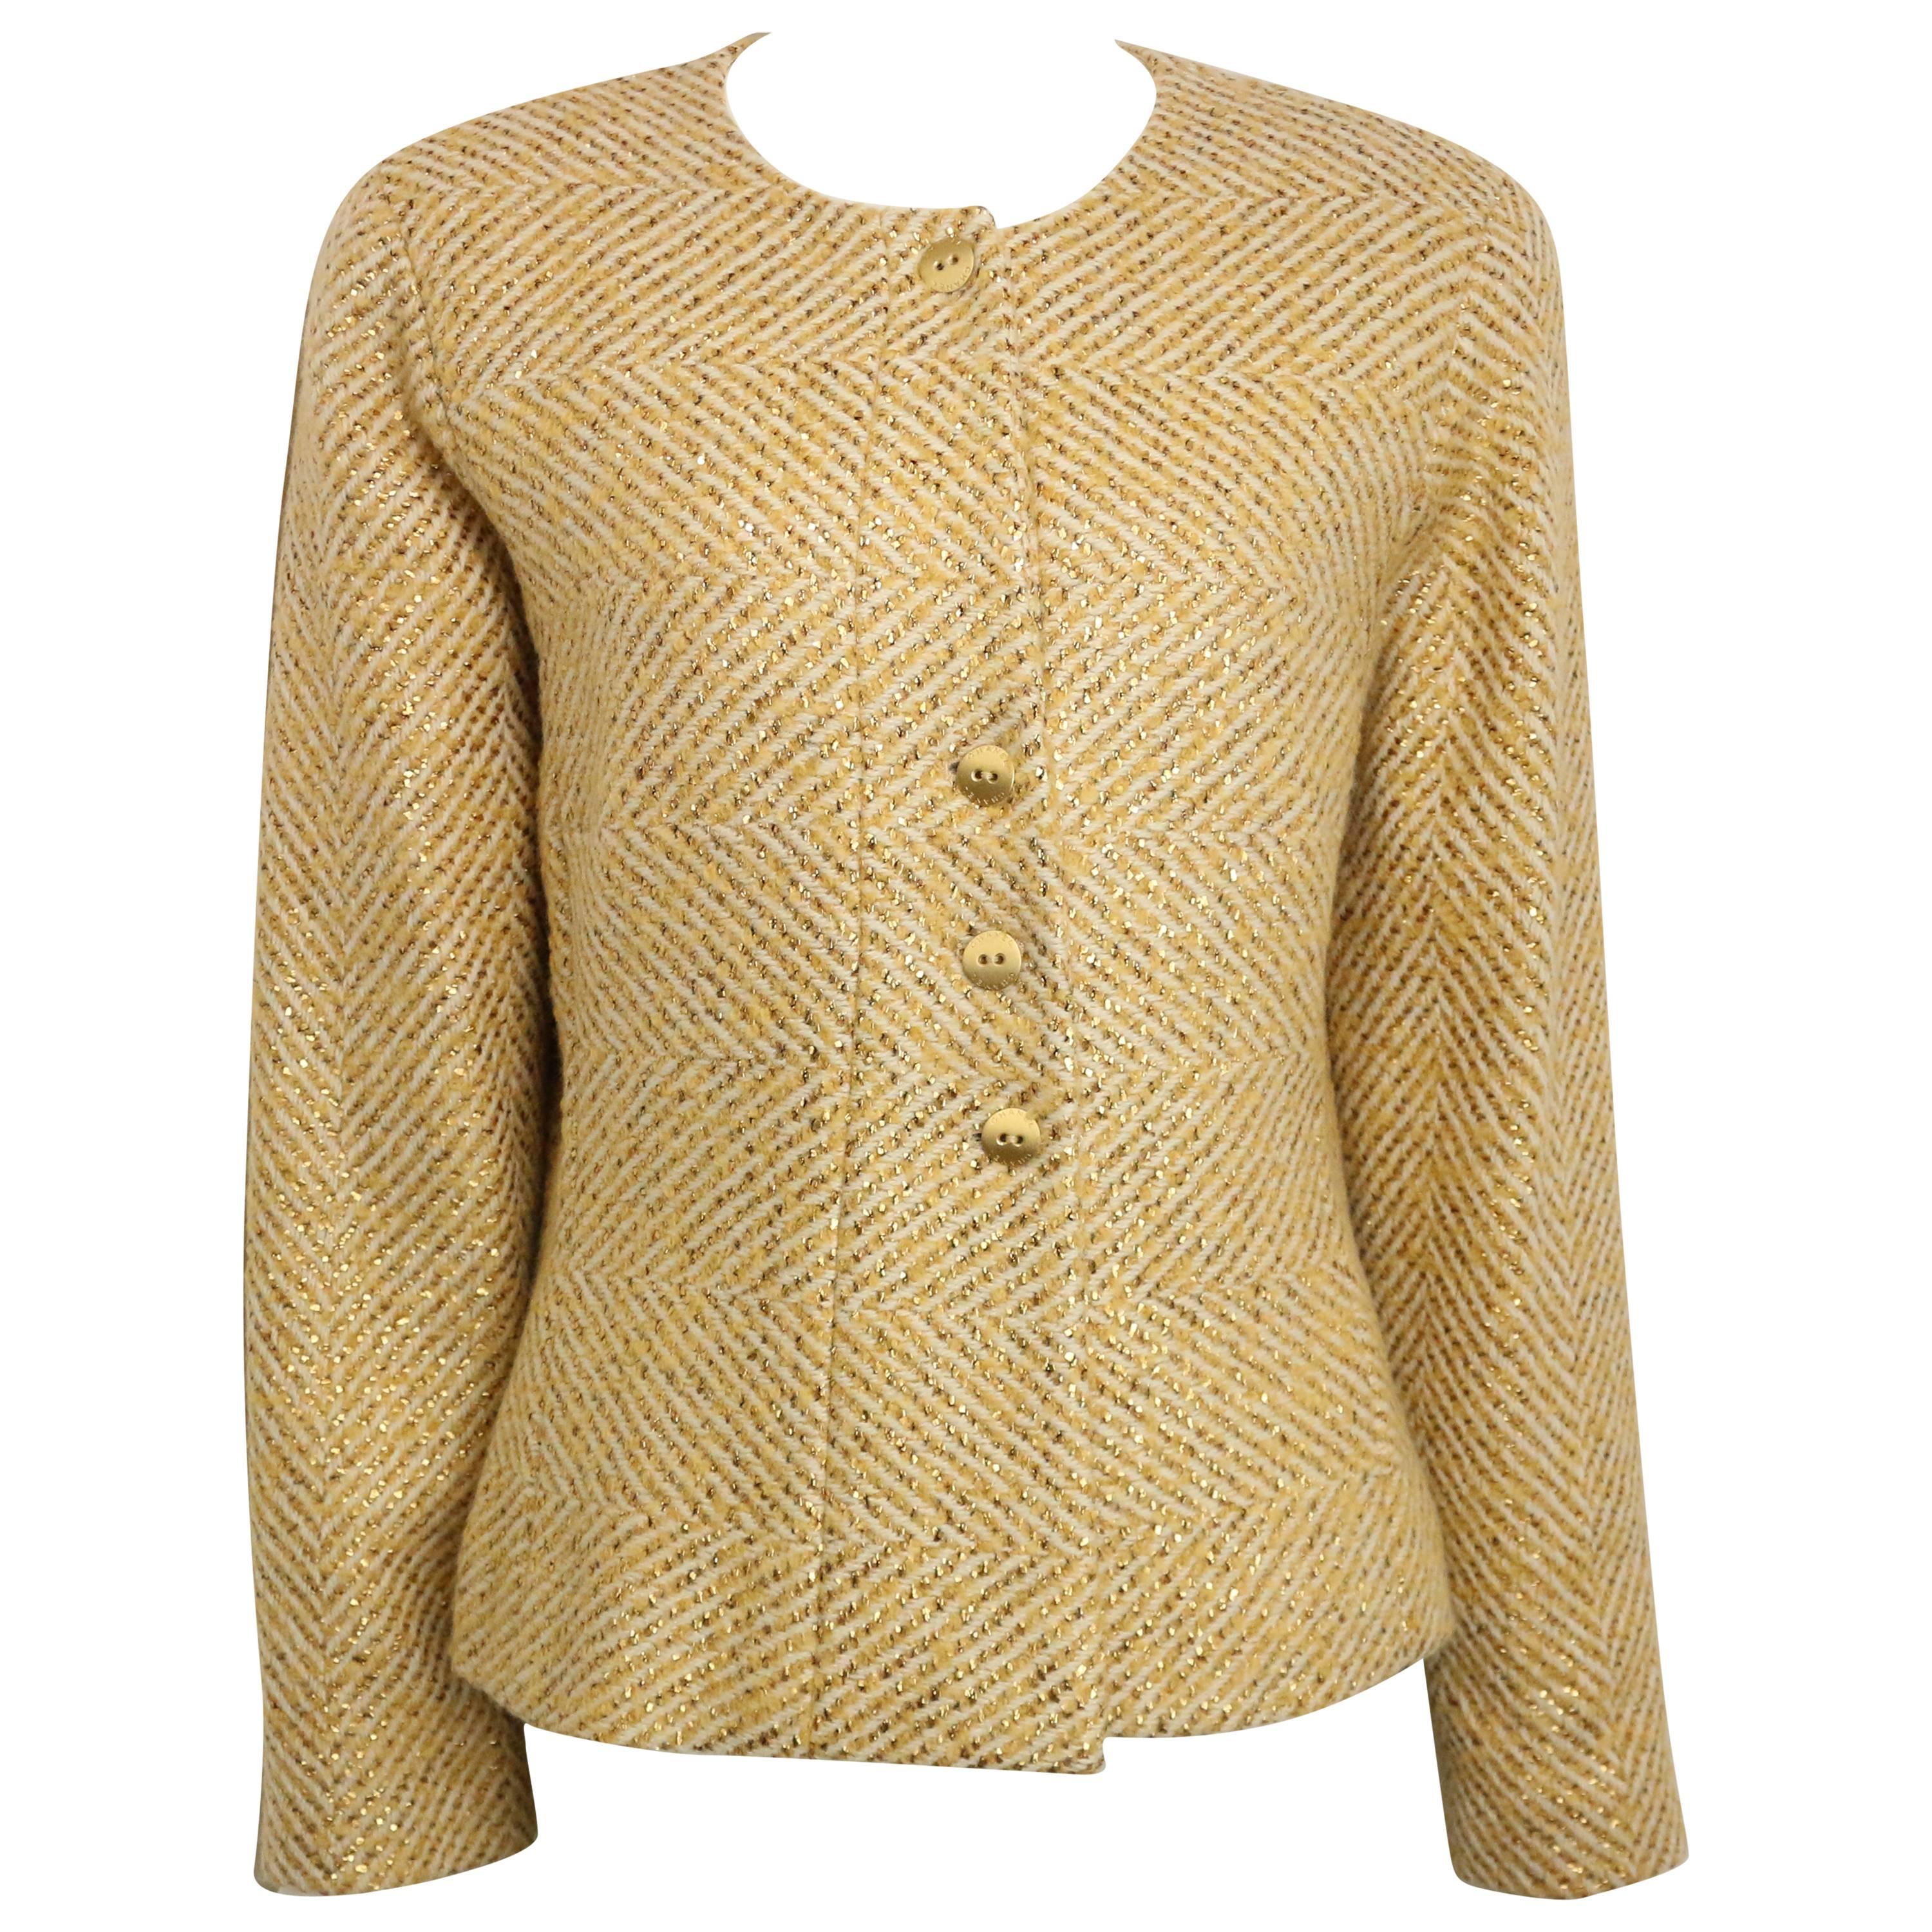 Chanel Gold Toned Metallic Glitter Wool Tweed Jacket